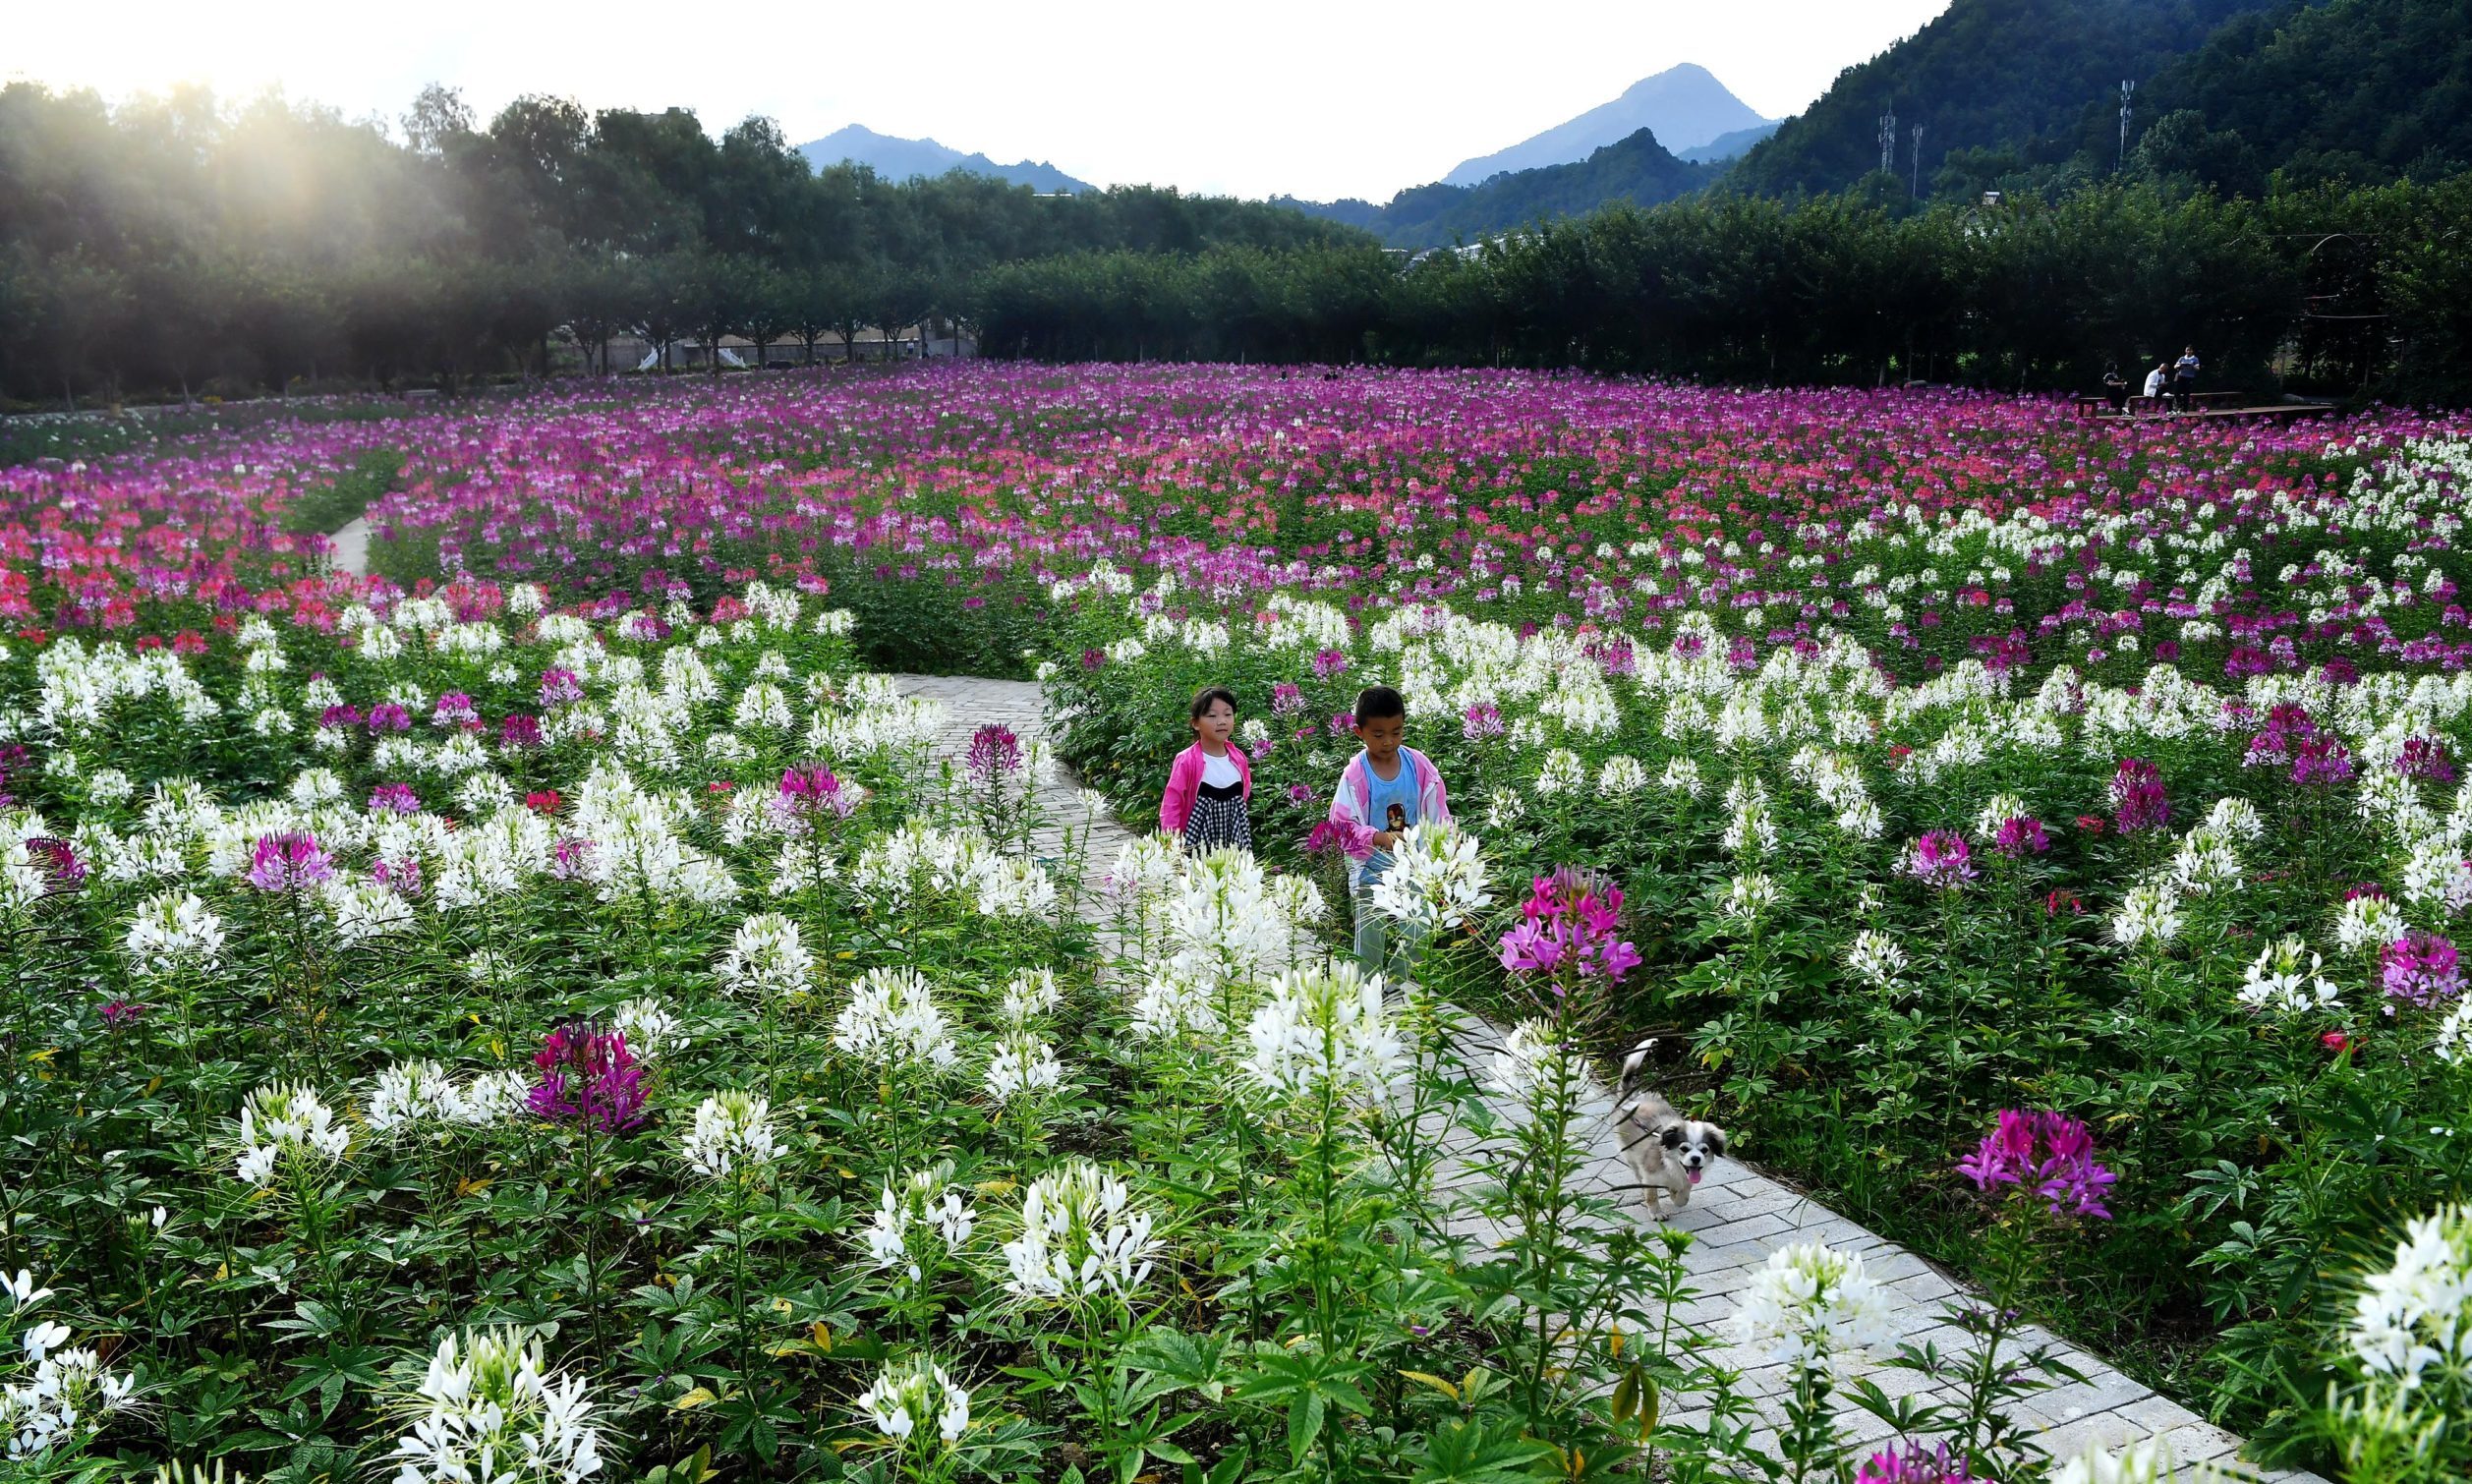 Mandatory Credit: Photo by Xinhua/Shutterstock (10699193f)
Children play at a flower field in Liuba County, Hanzhong City of northwest China's Shaanxi Province, July 1, 2020.
China Shaanxi Liuba Flower Field - 01 Jul 2020